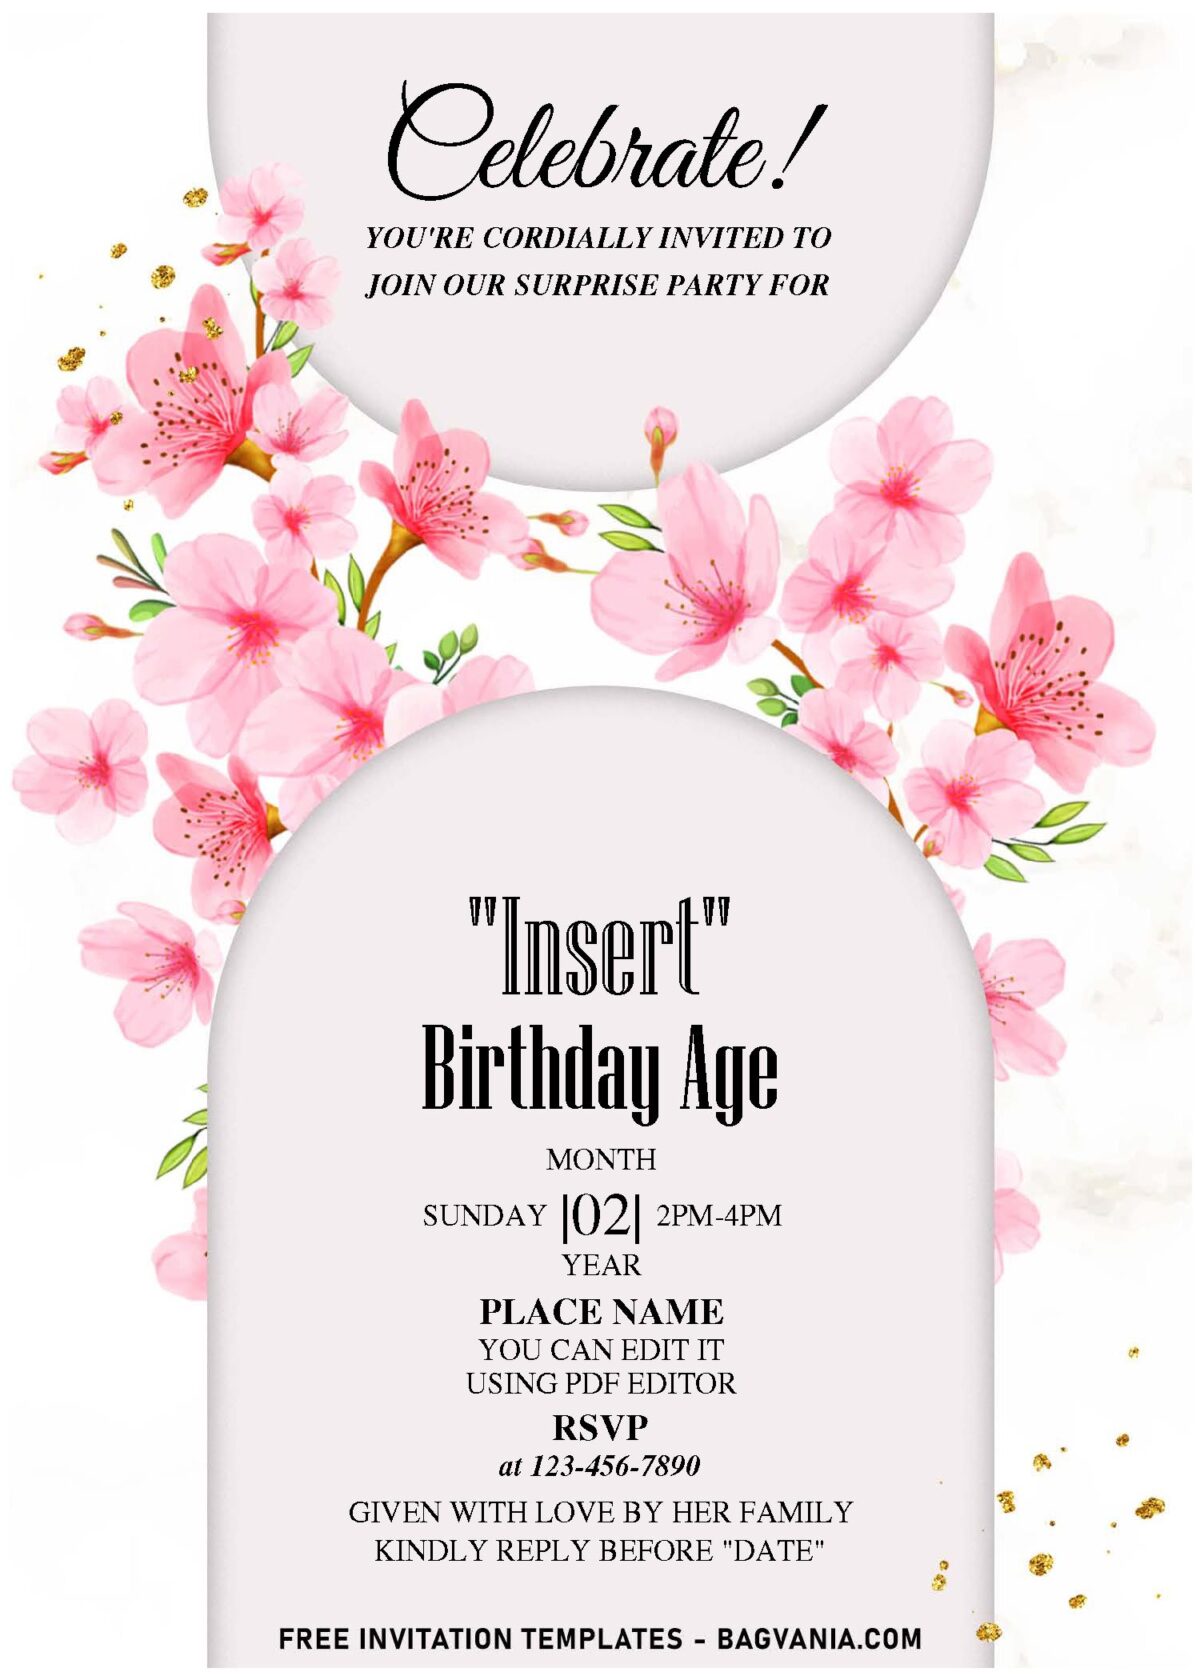 (Free Editable PDF) Picturesque Pink Japanese Sakura Birthday Invitation Templates with enchanting watercolor Cherry Blossom